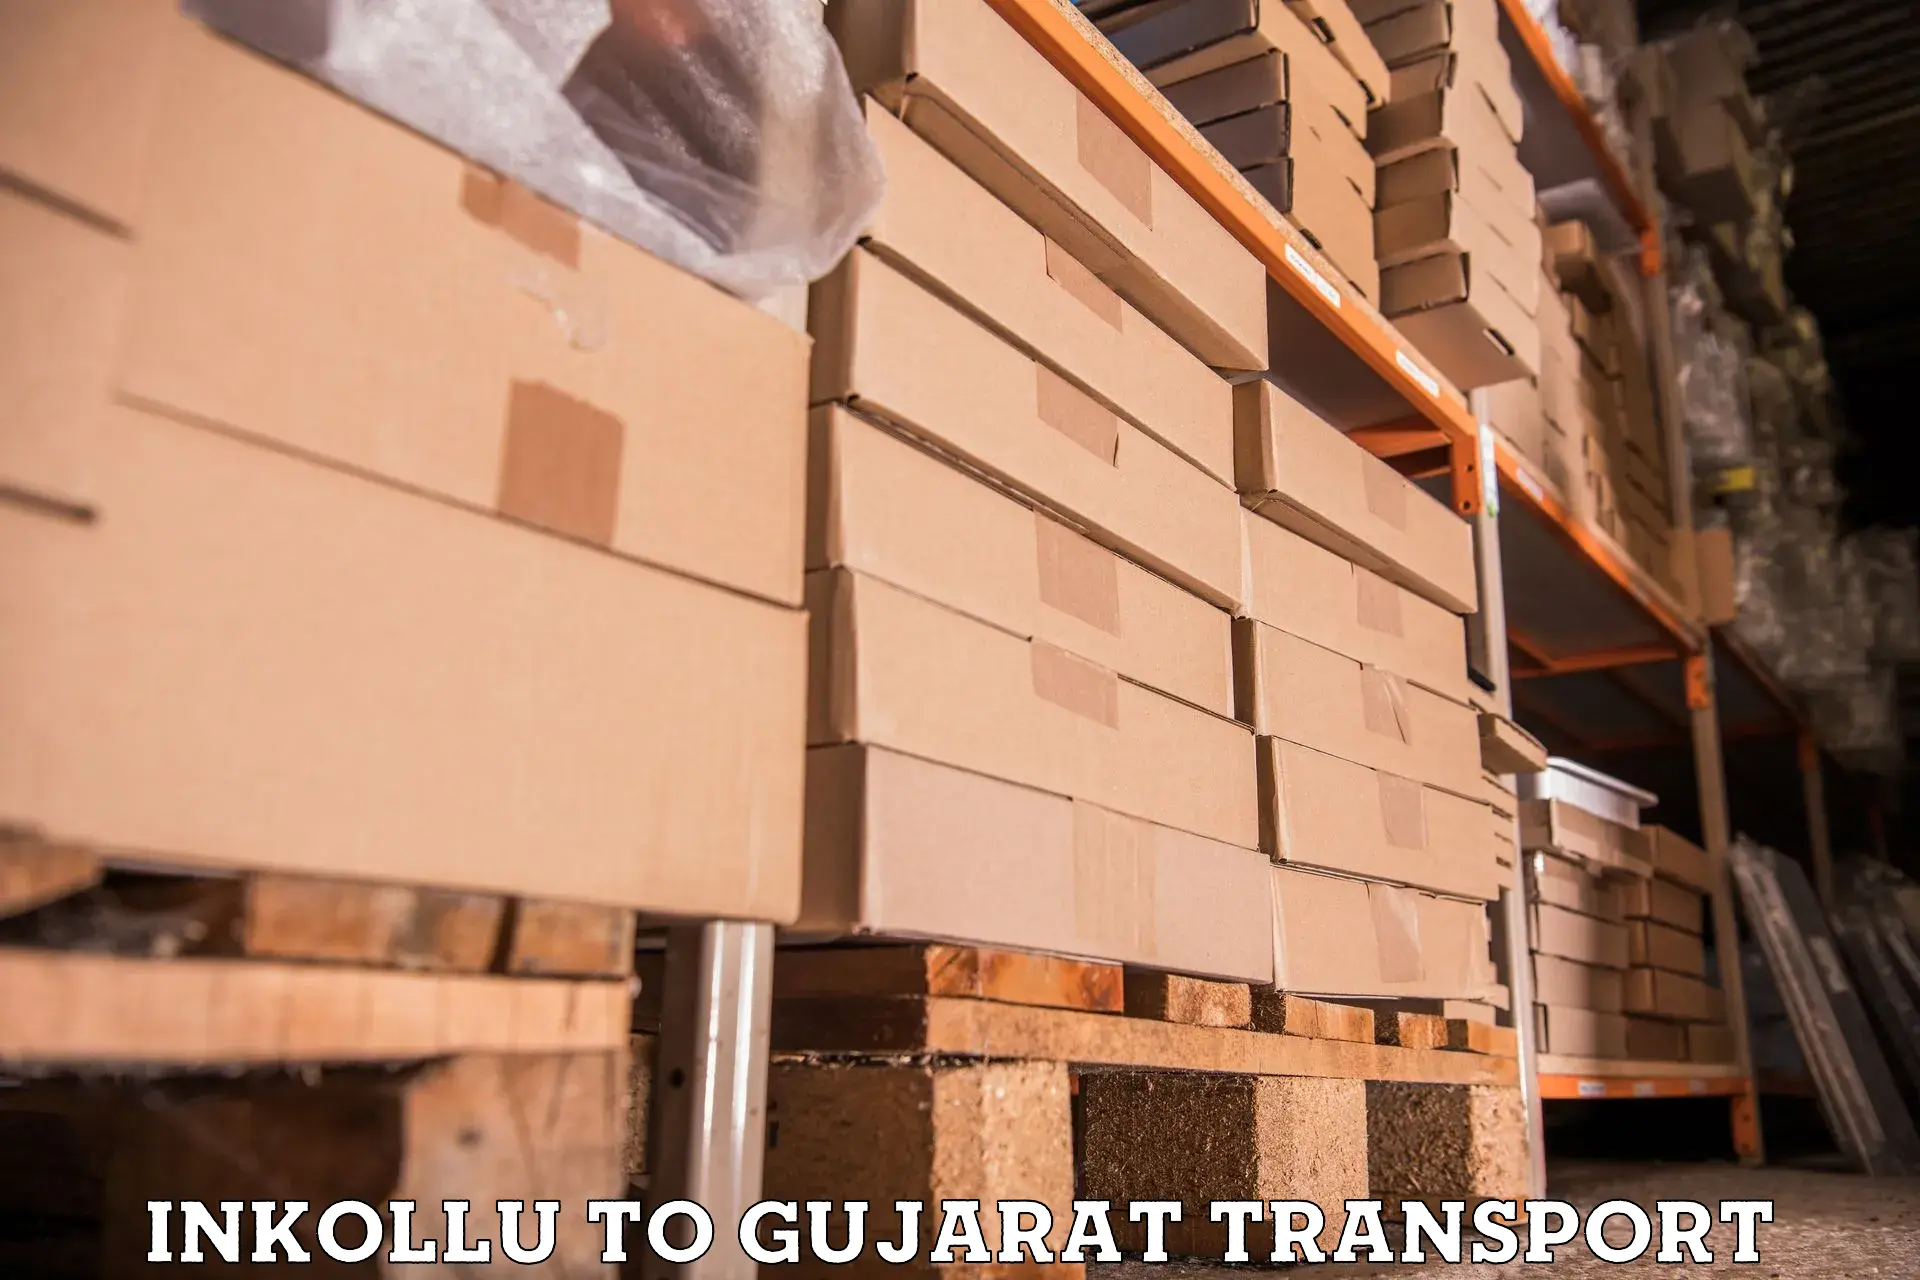 Transport in sharing Inkollu to Gujarat